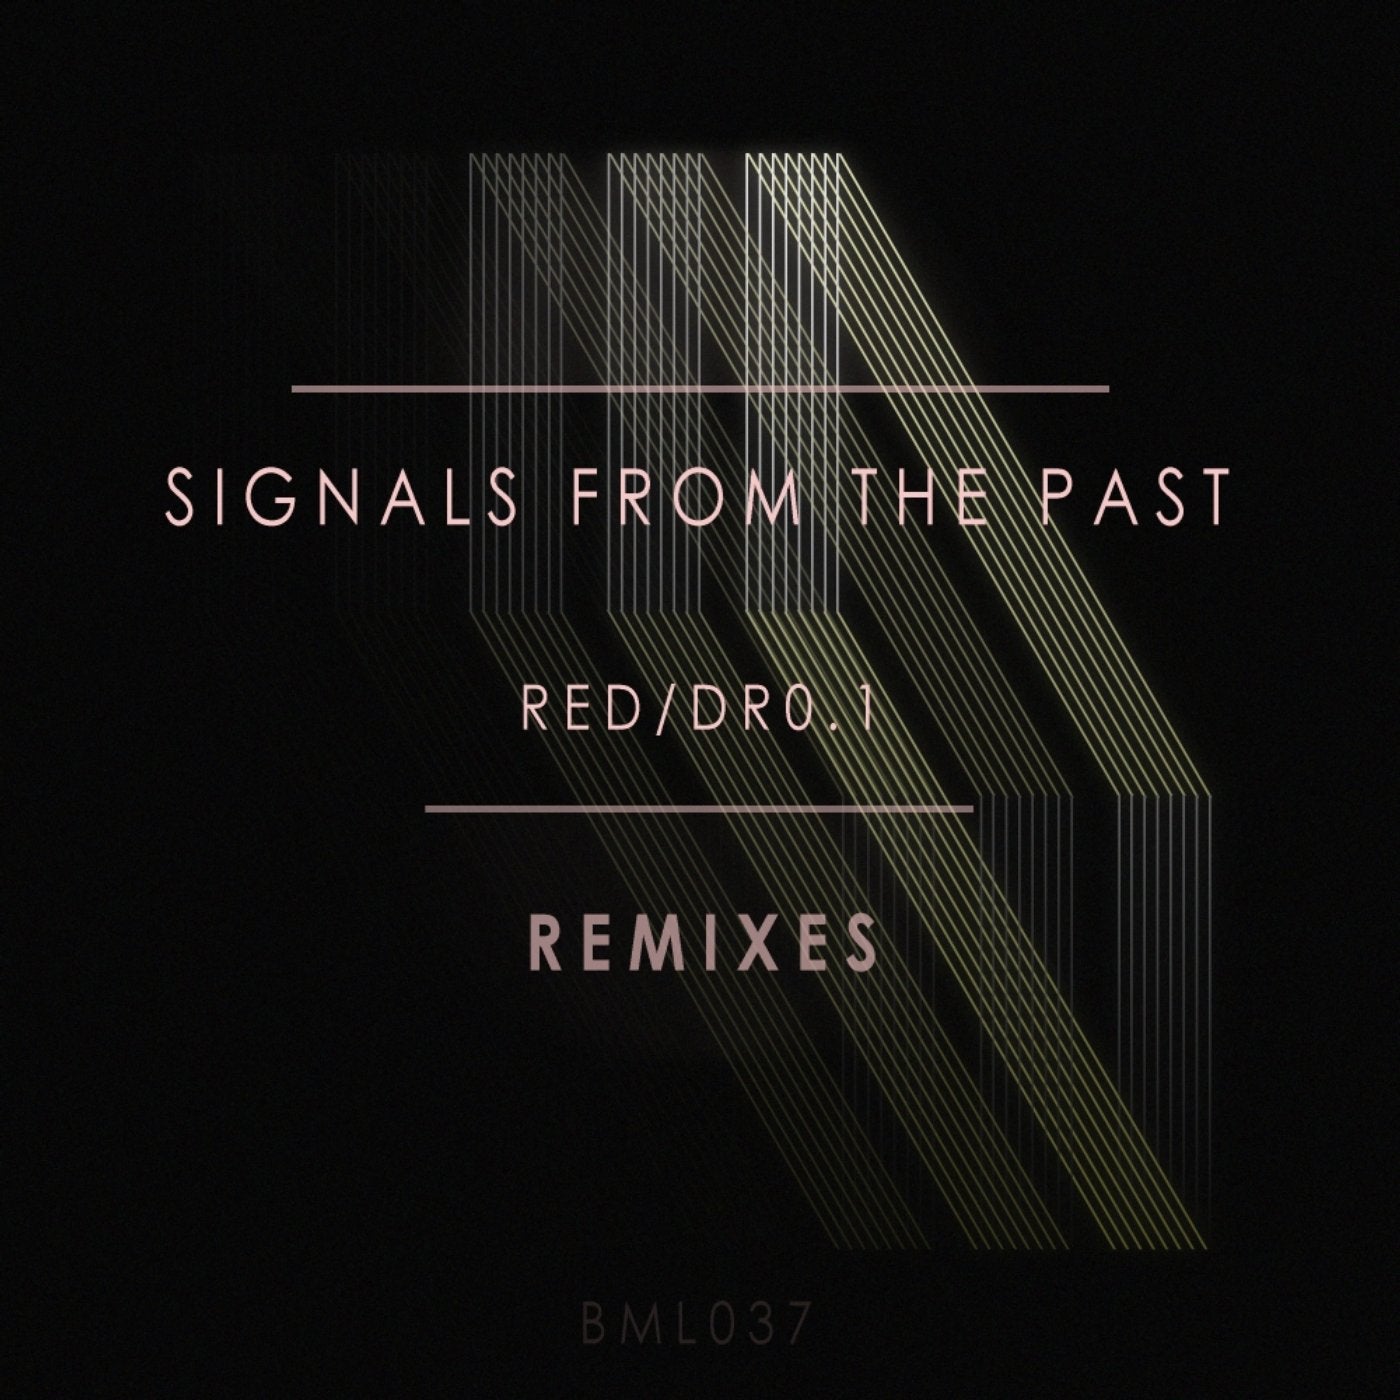 Red / DR0.1 Remixes